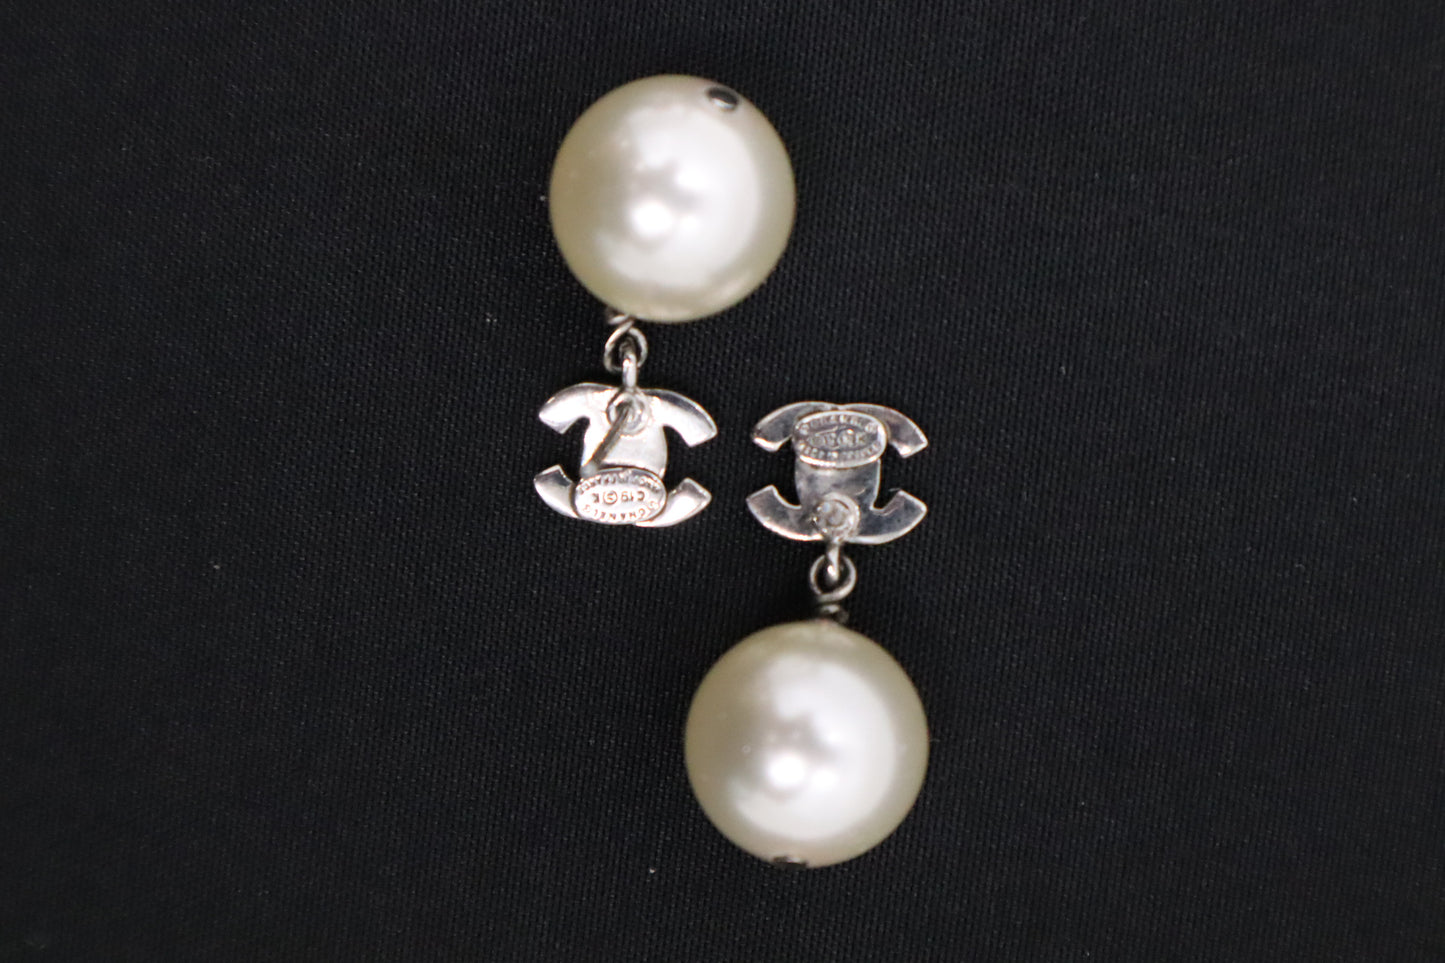 Chanel Rhinestone Pearl Earrings